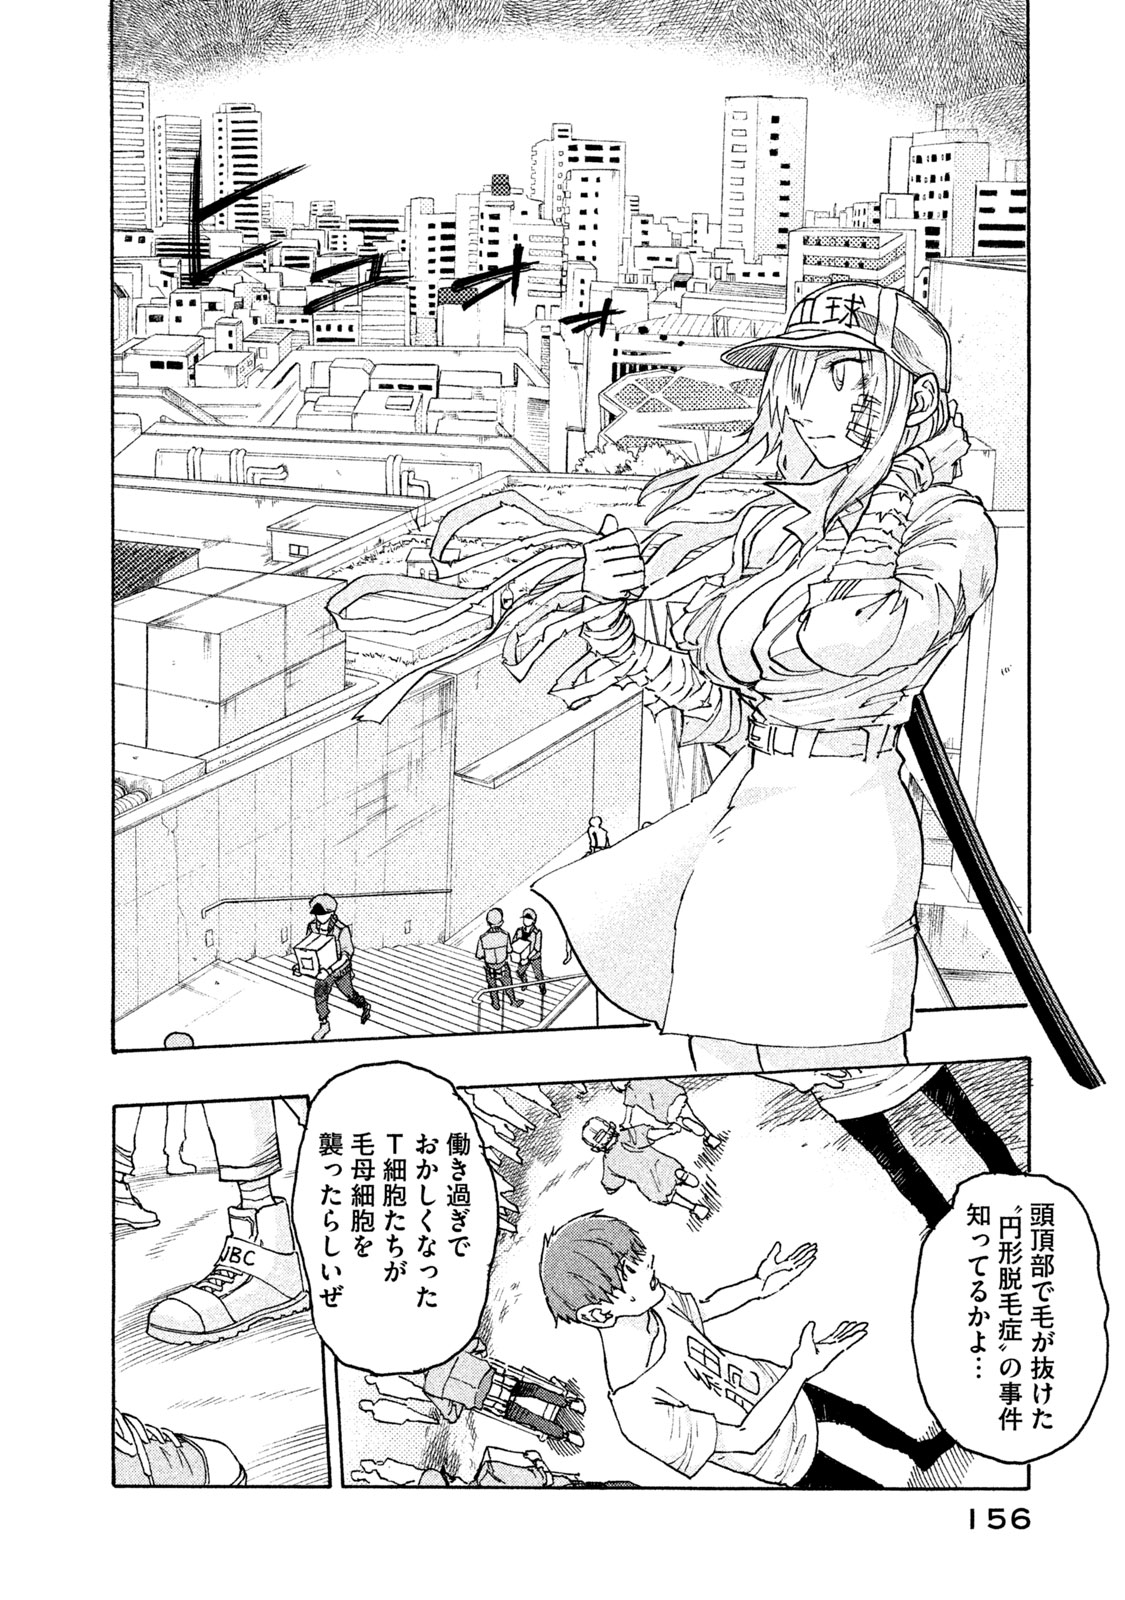 Hataraku Saibou BLACK - Chapter 5 - Page 30